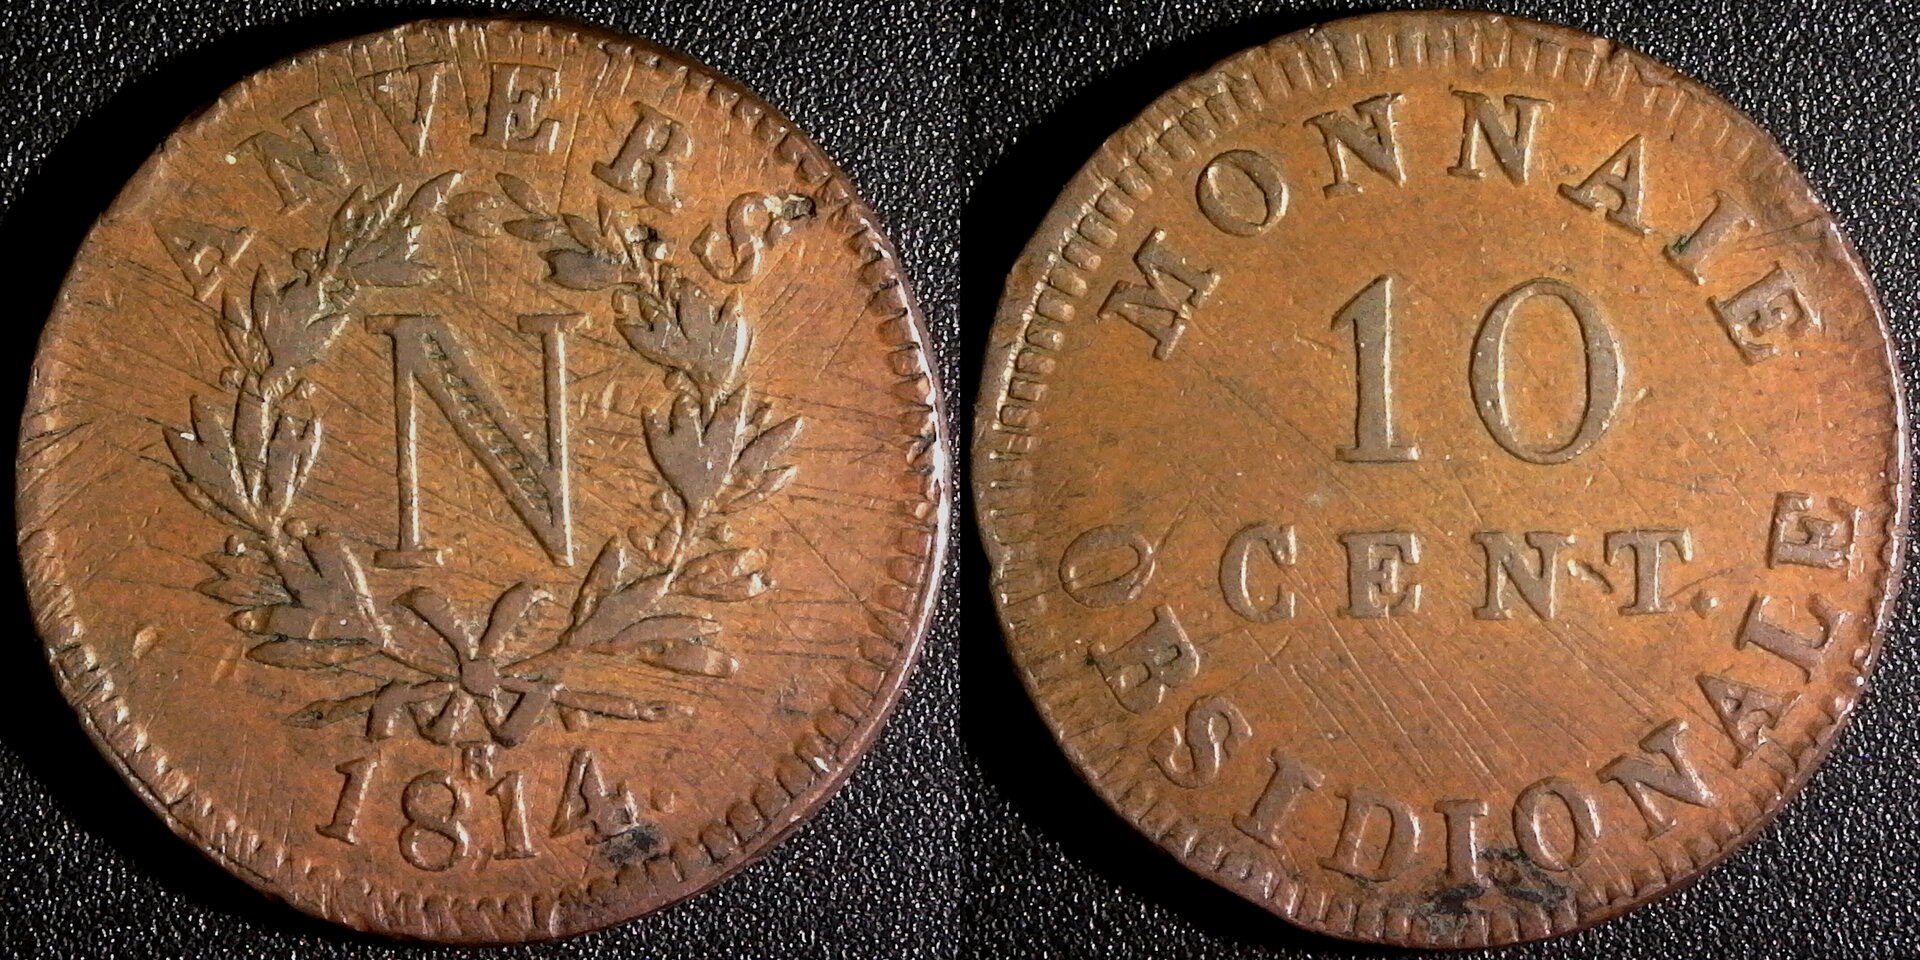 France Antwerp Siege coinage 10 Centimes 1814 rev-side.jpg